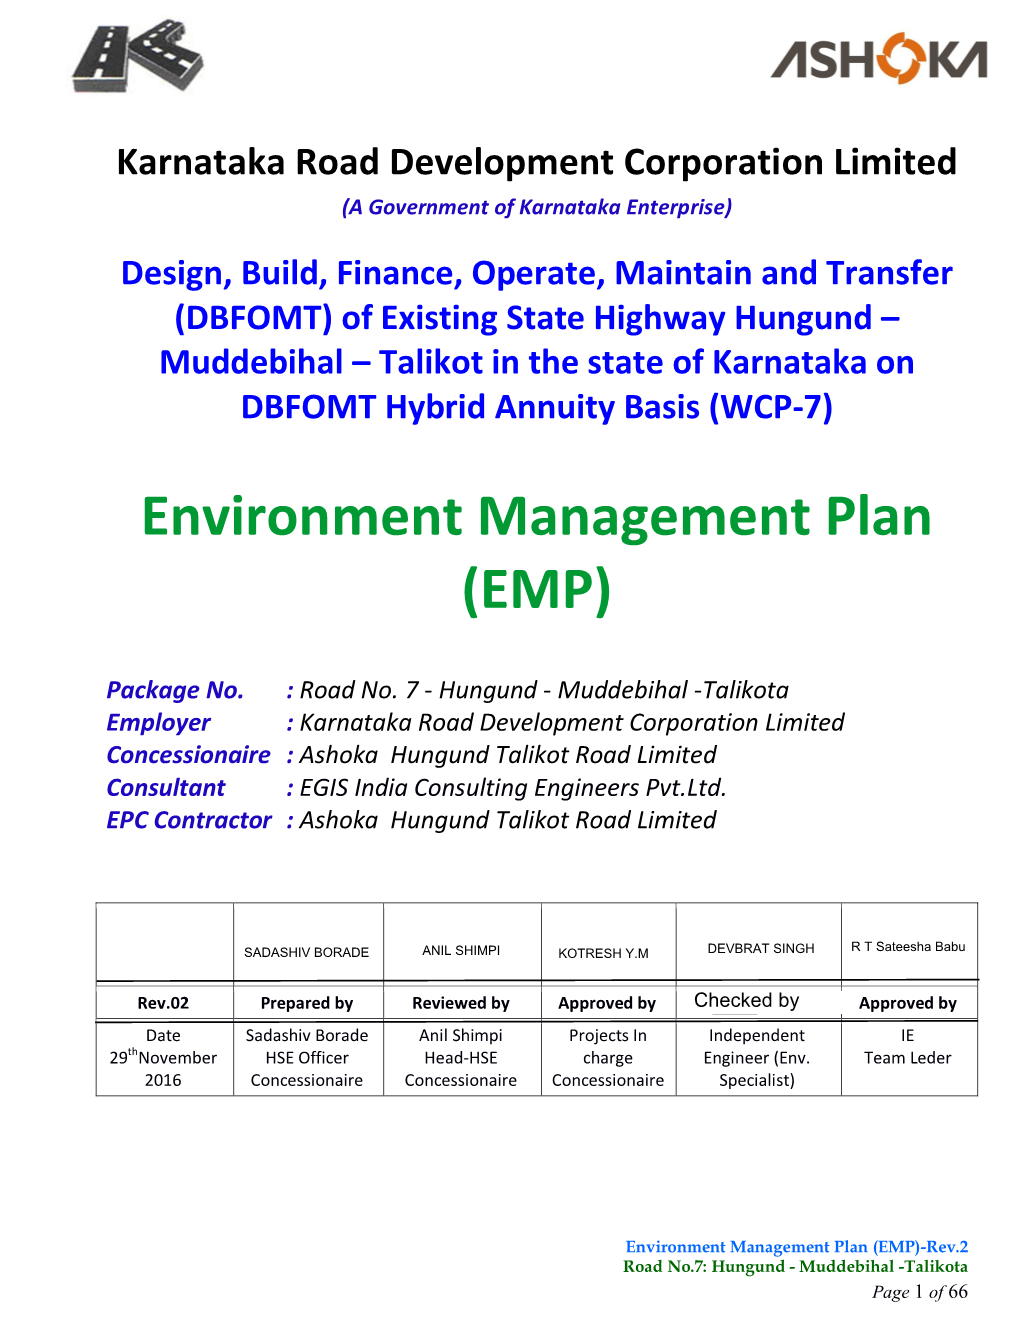 Environment Management Plan (EMP)